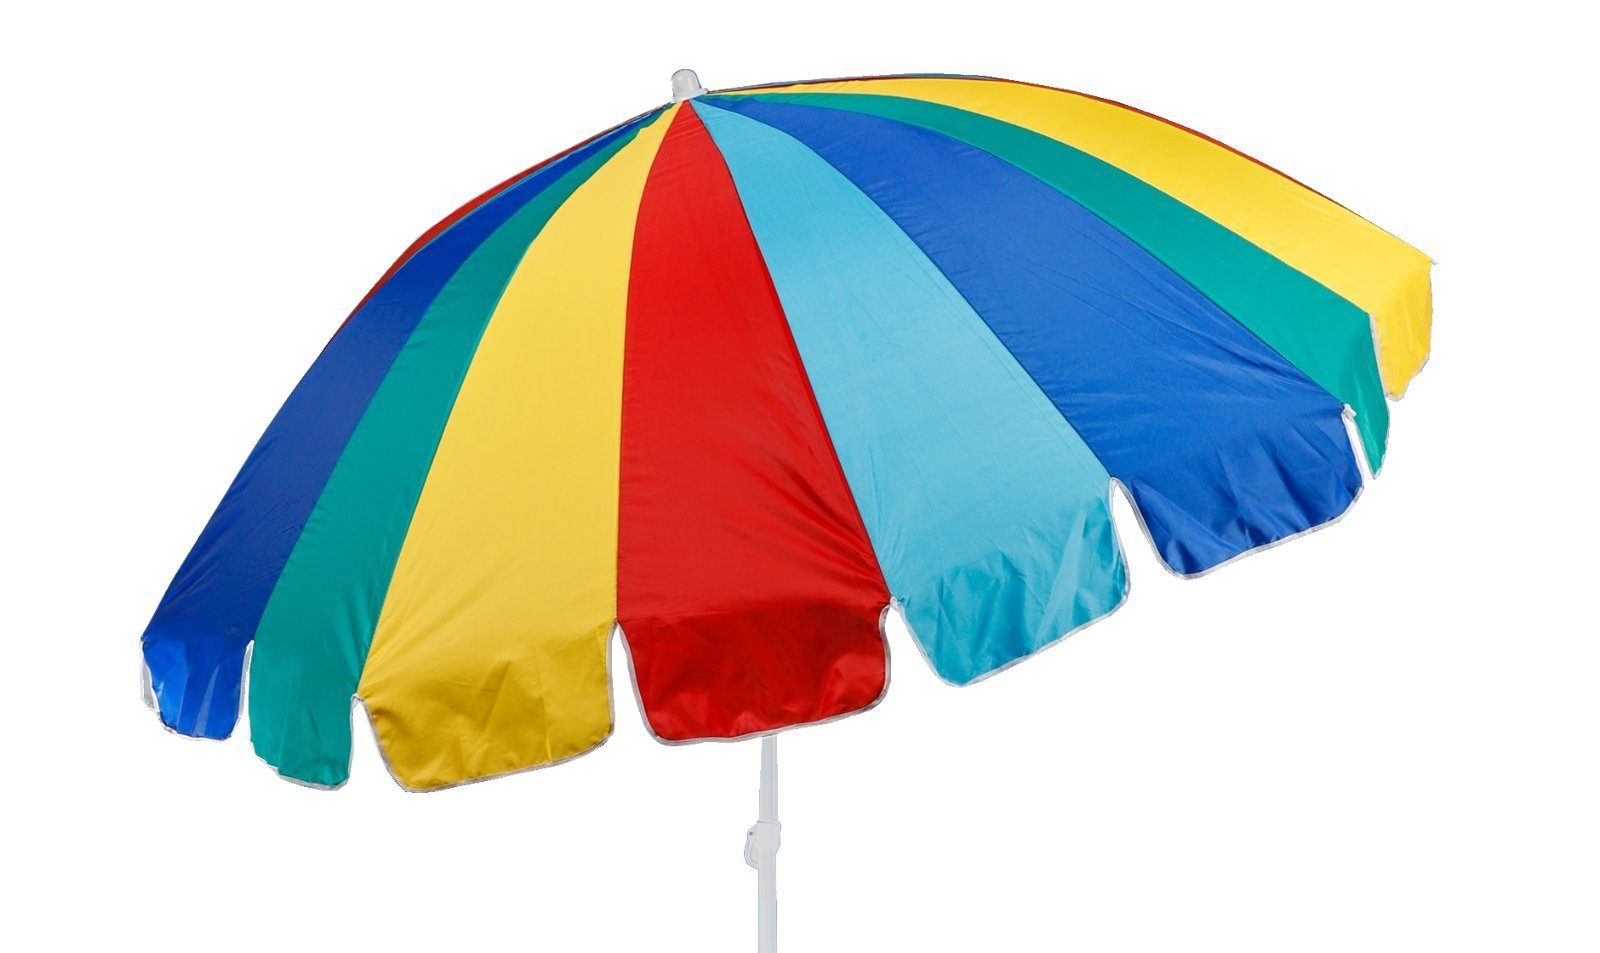 Sonnenschirm mit Knickgelenk,Metall,Strandschirm Regenbogen,Sonnen Strand Schirm 